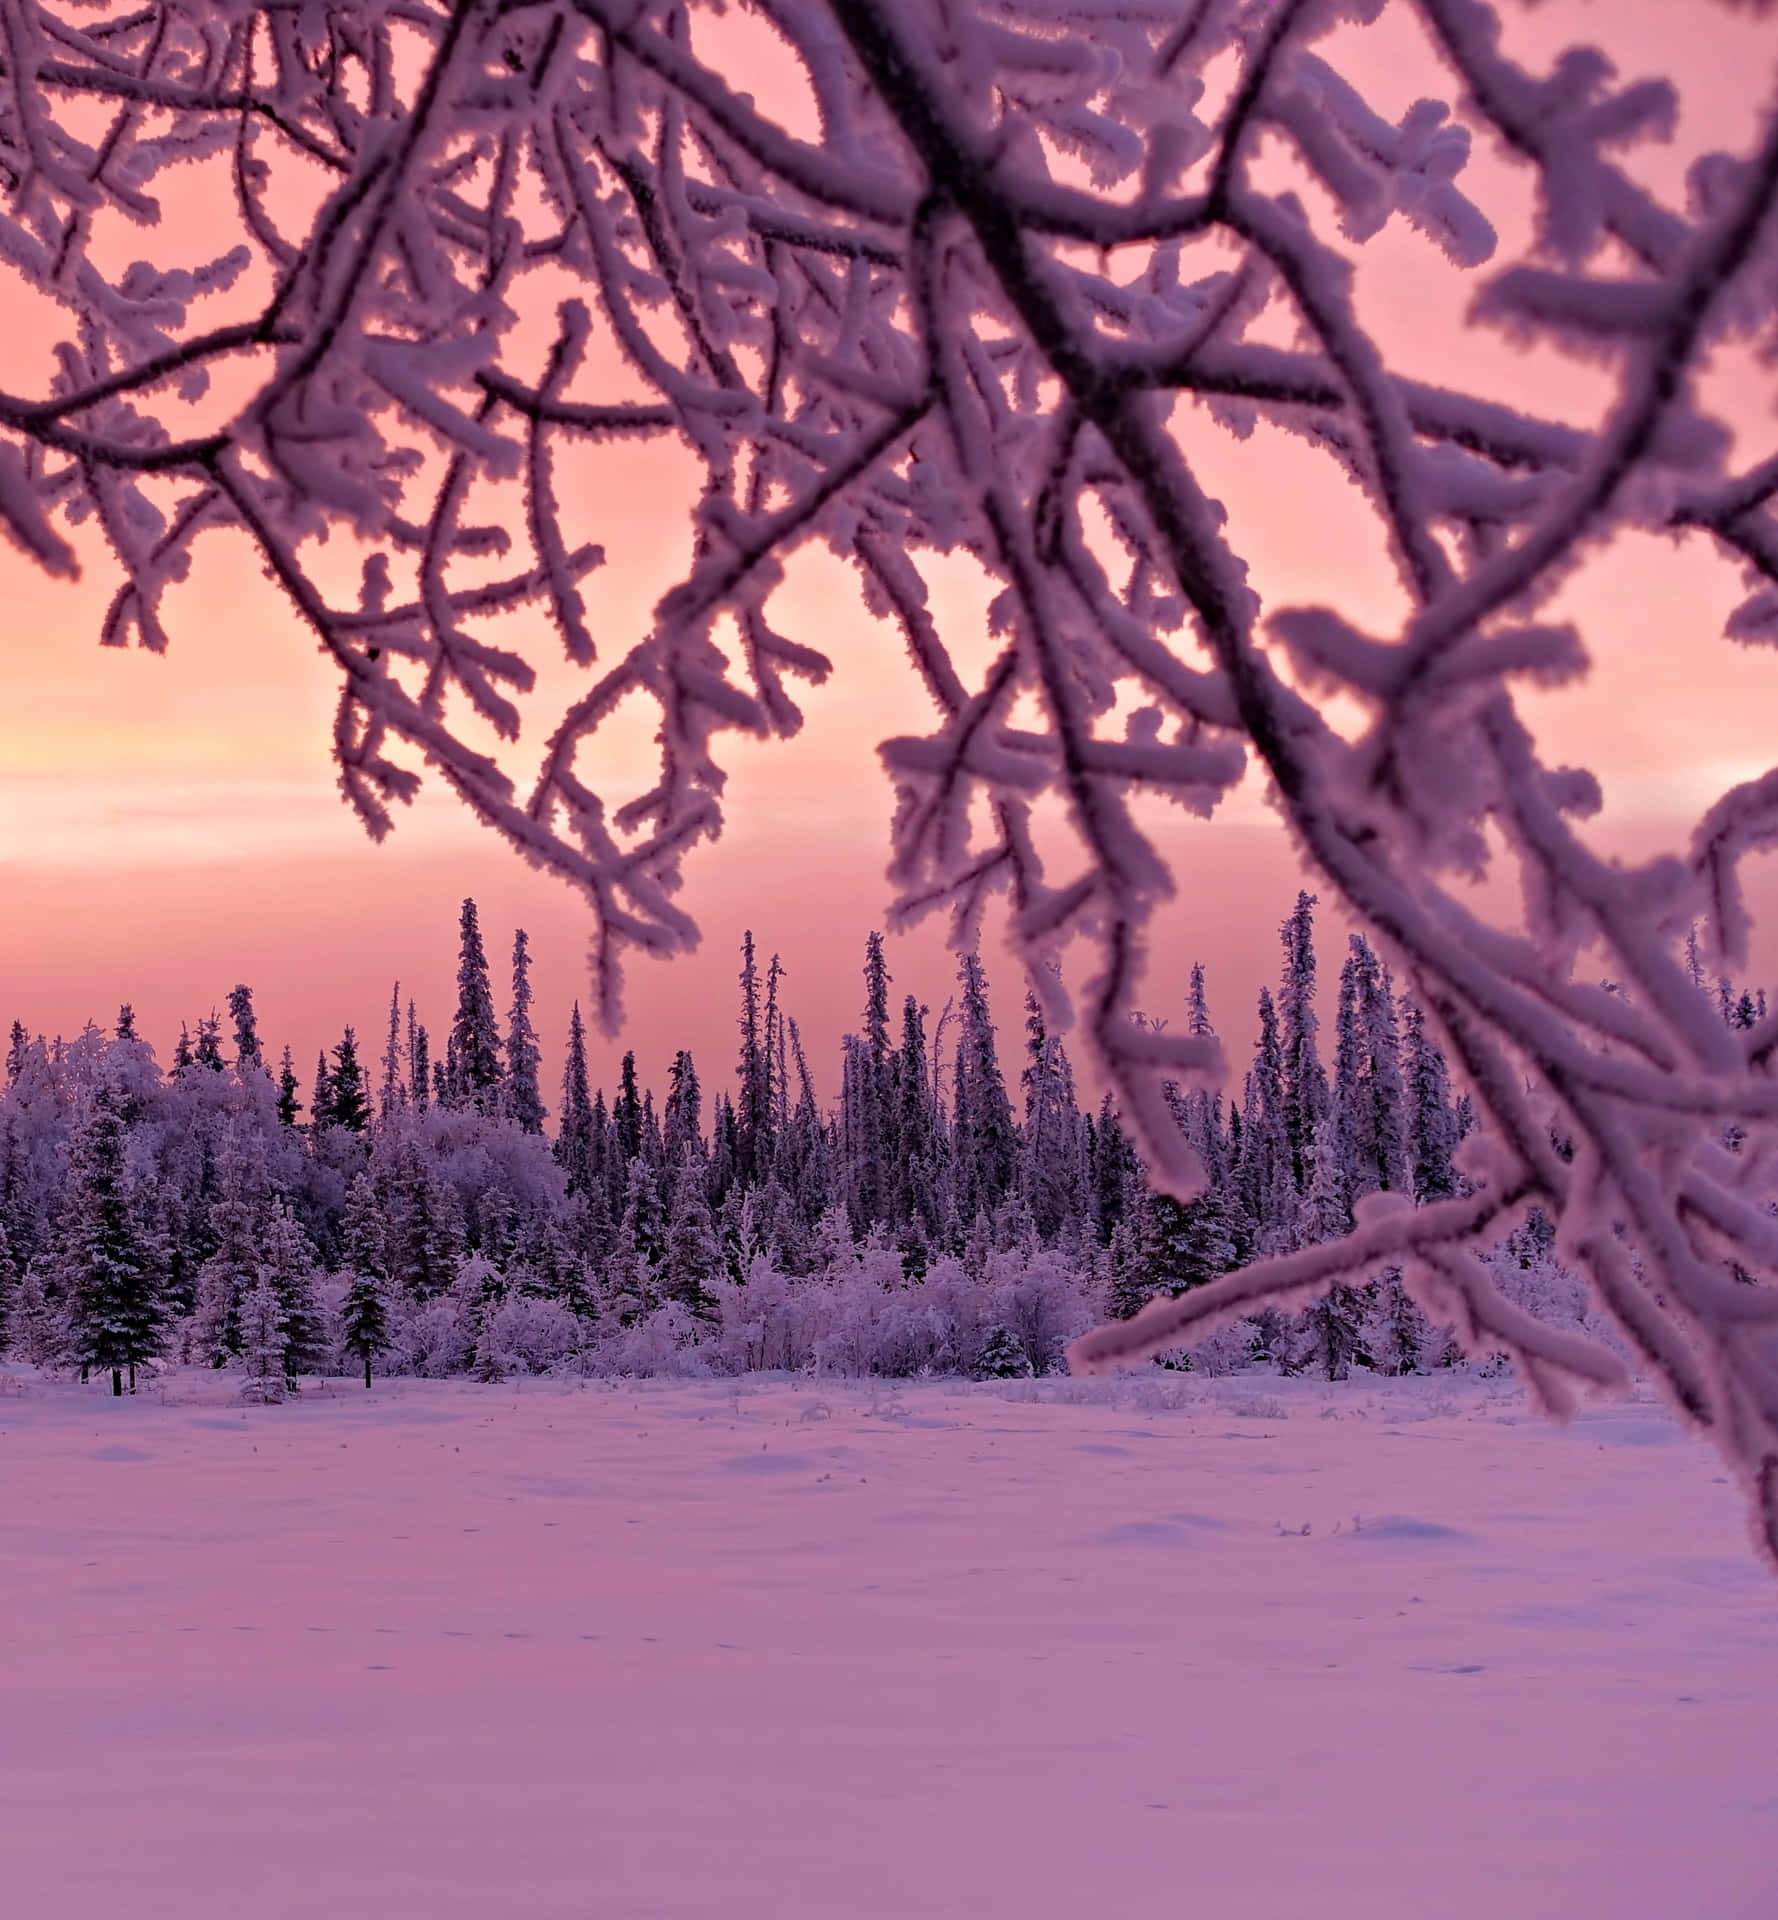 Winter Sun Peeking Through The Snow-Covered Trees Wallpaper